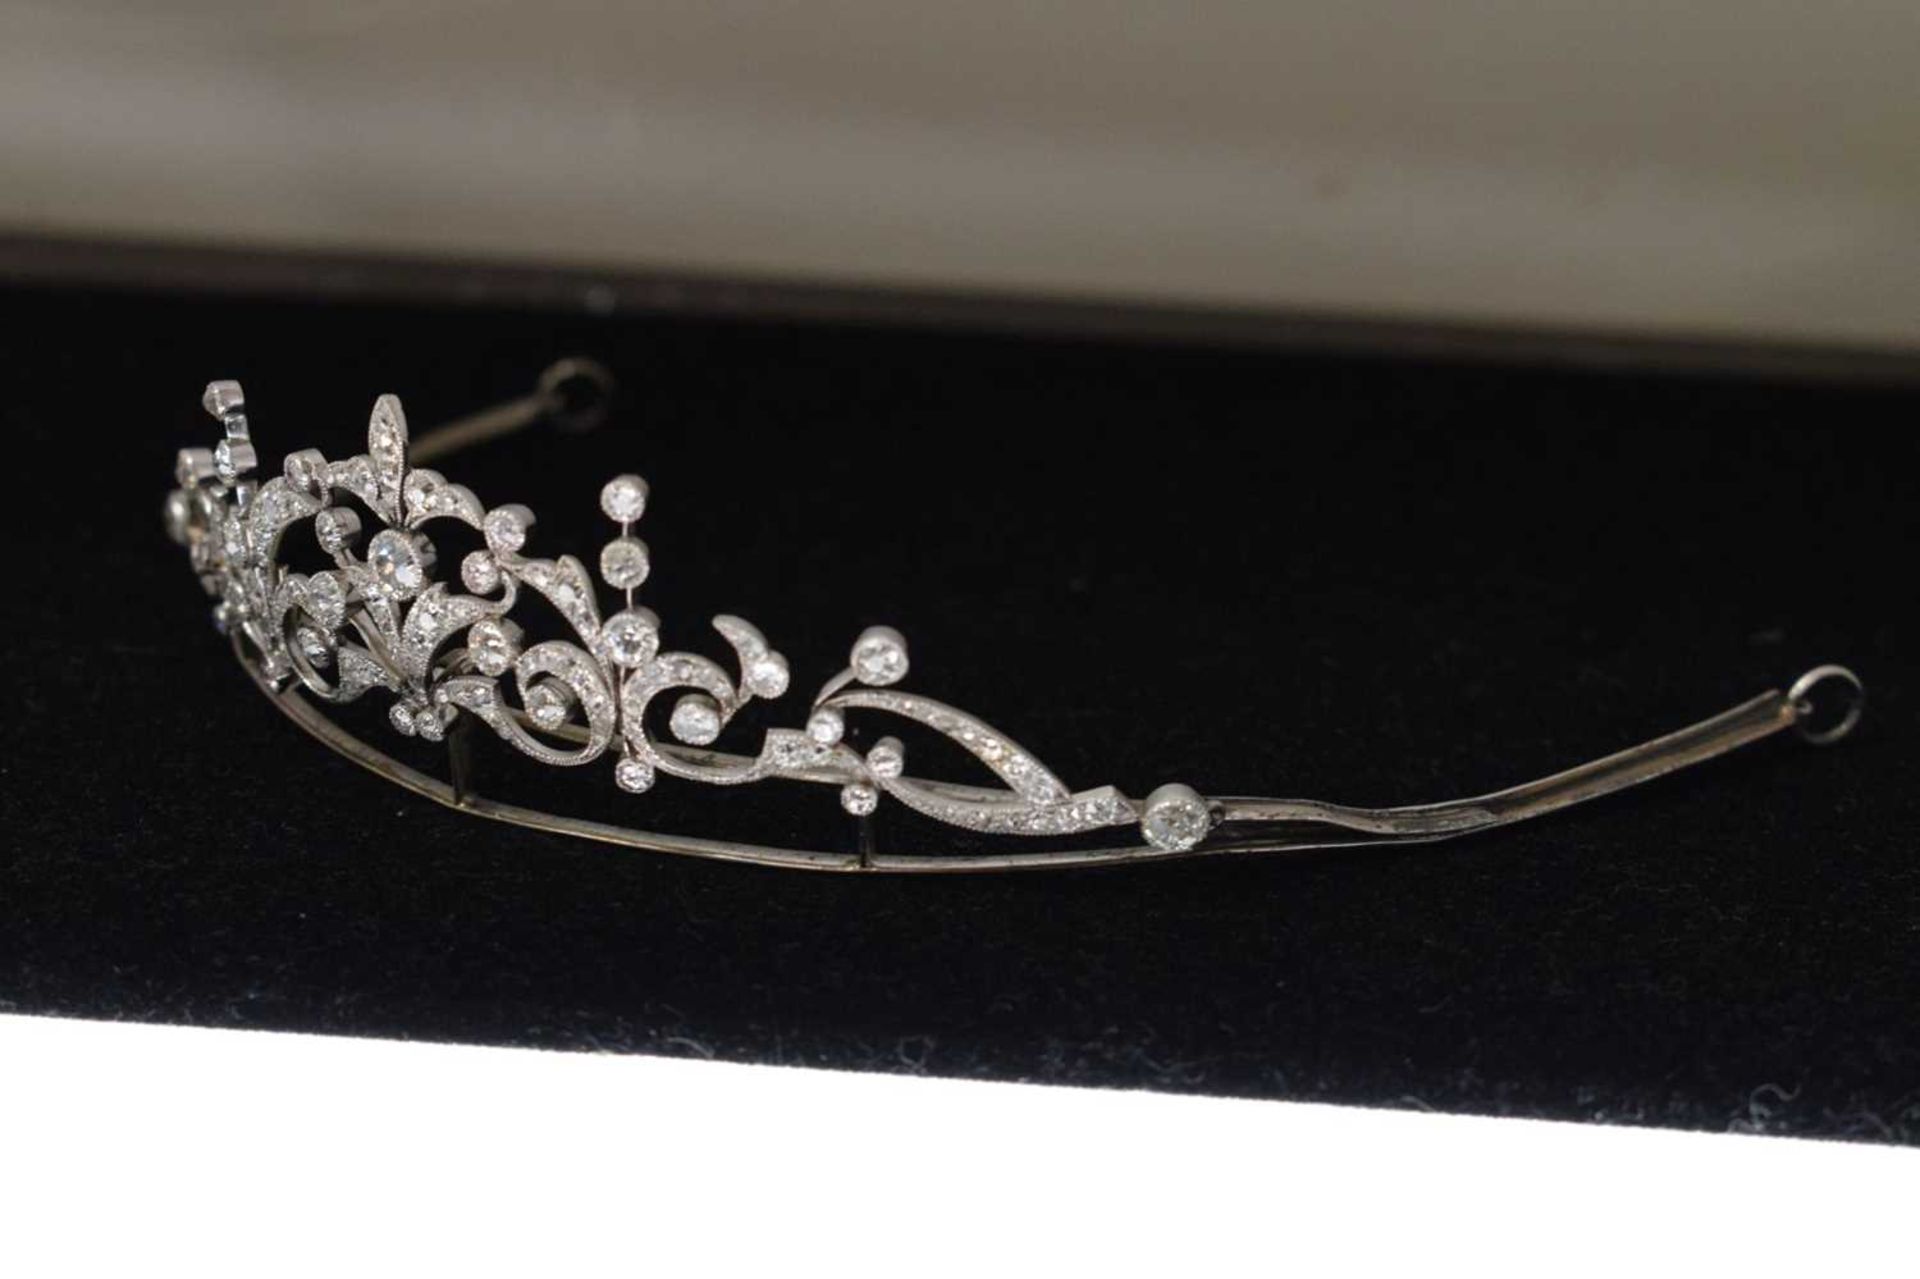 Early 20th century Belle Époque diamond tiara - Image 10 of 37